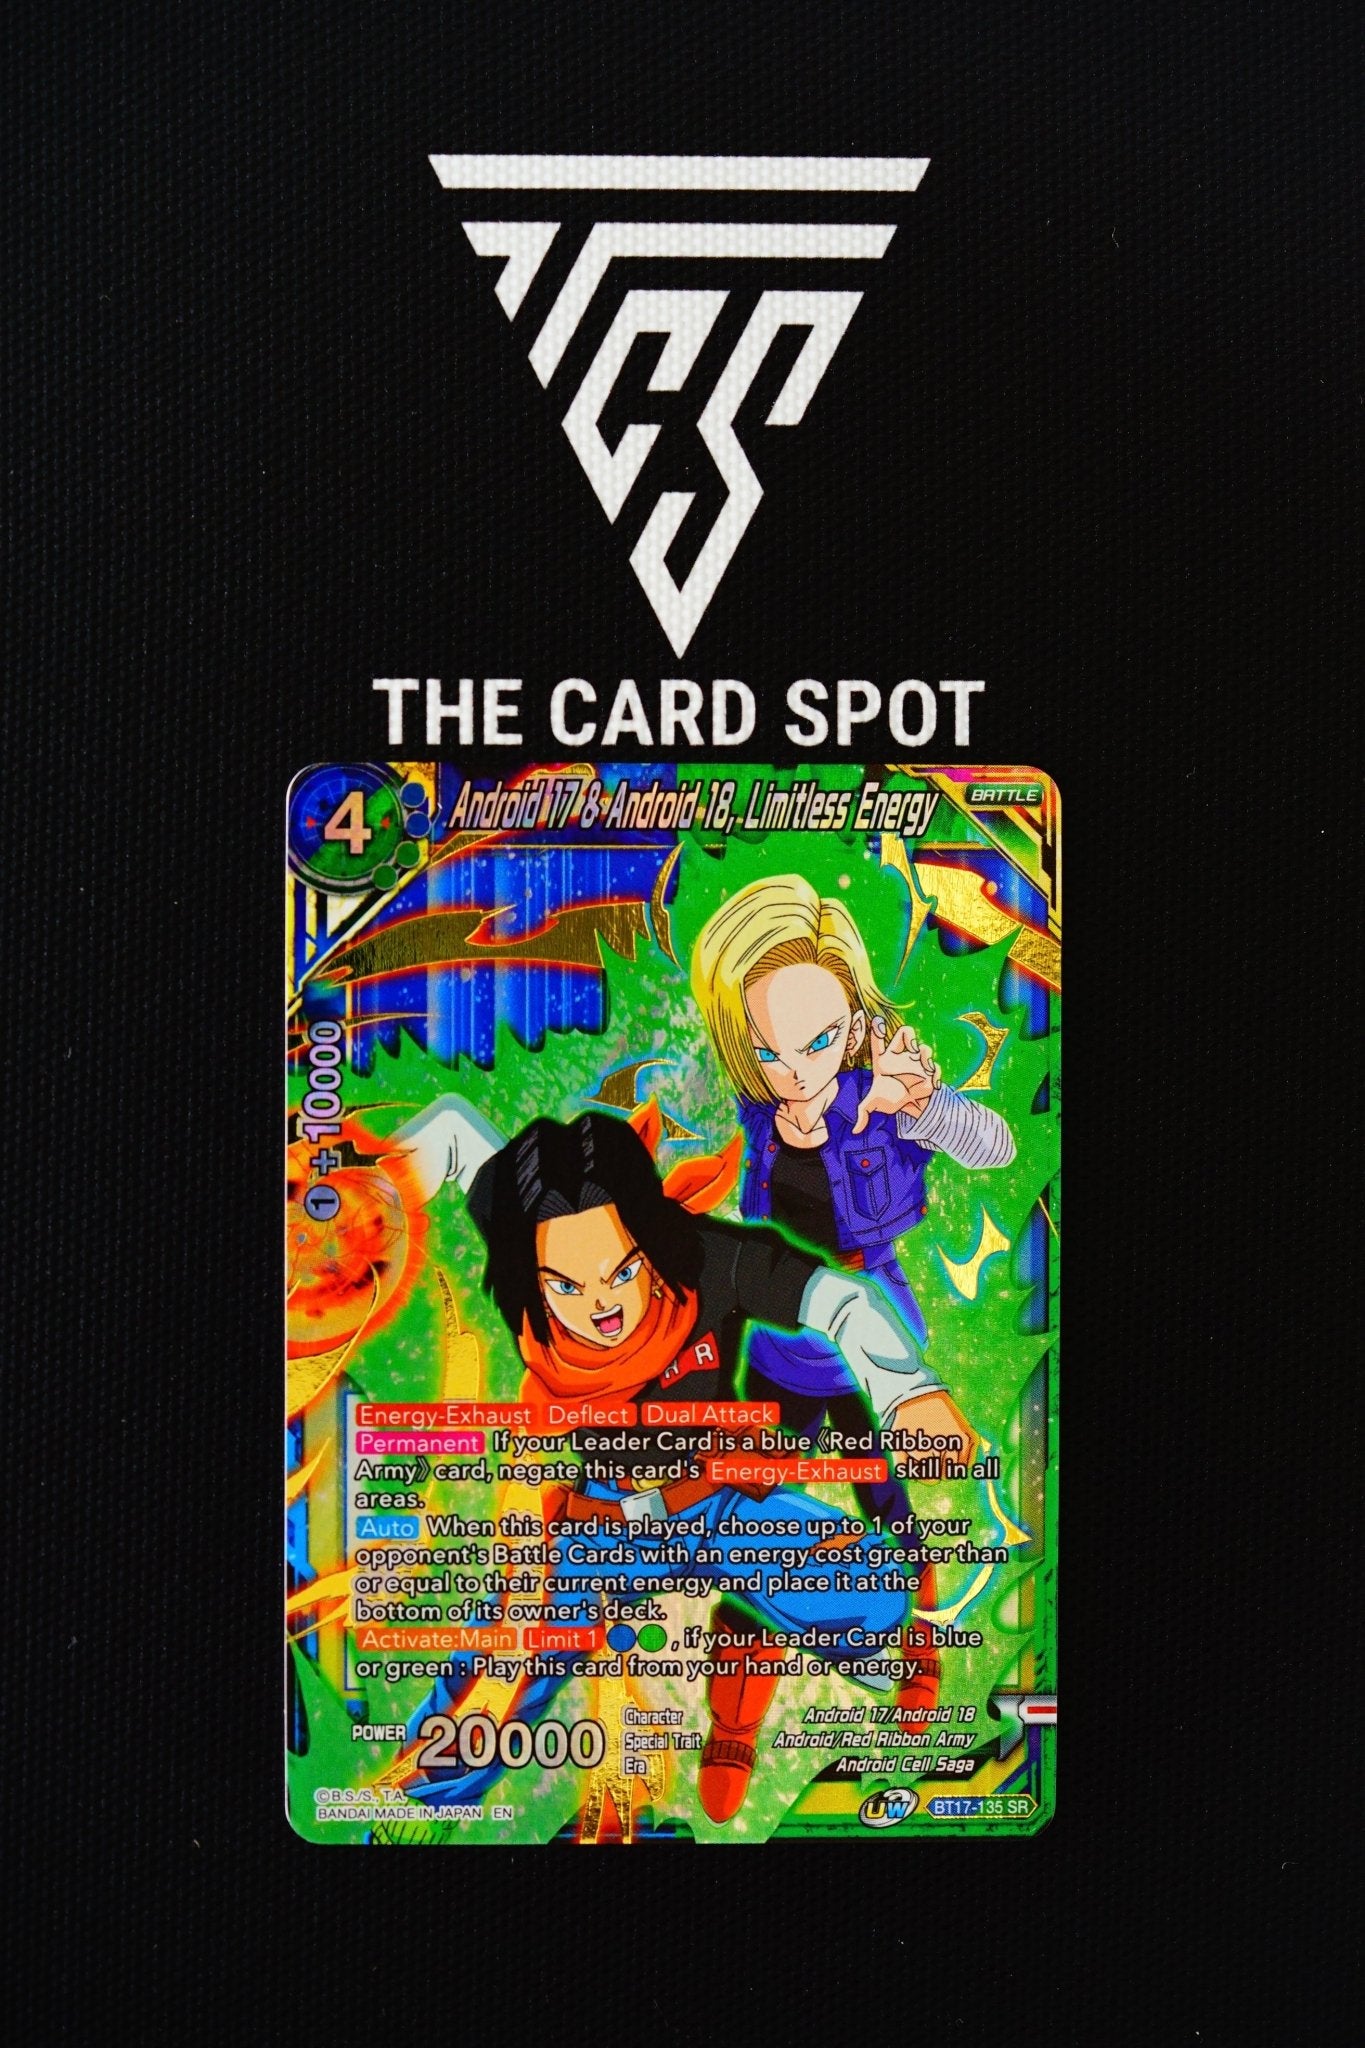 BT17-135 SR - Android 17 & Android 18, Limitless Energy - Dragon Ball Card - THE CARD SPOT PTY LTD.Dragon Ball Single CardDragon Ball Super